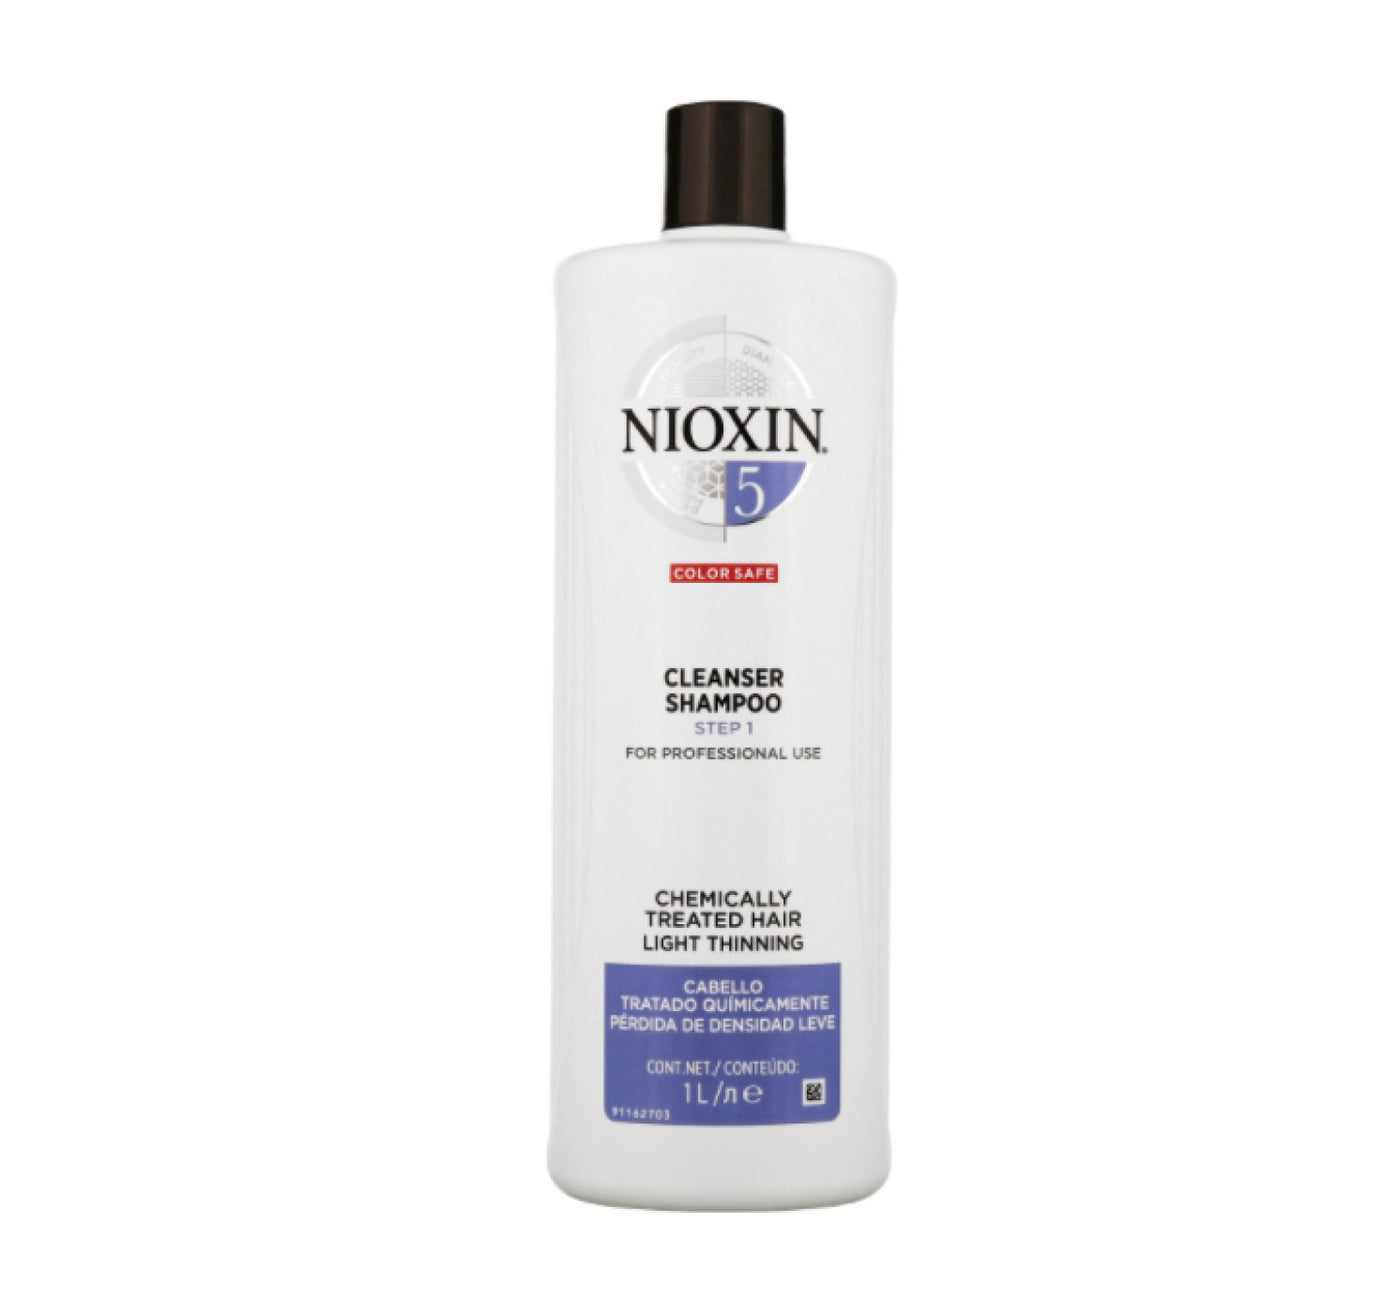 Nioxin System 5 Cleanser Shampoo 1000ml - Salon Warehouse